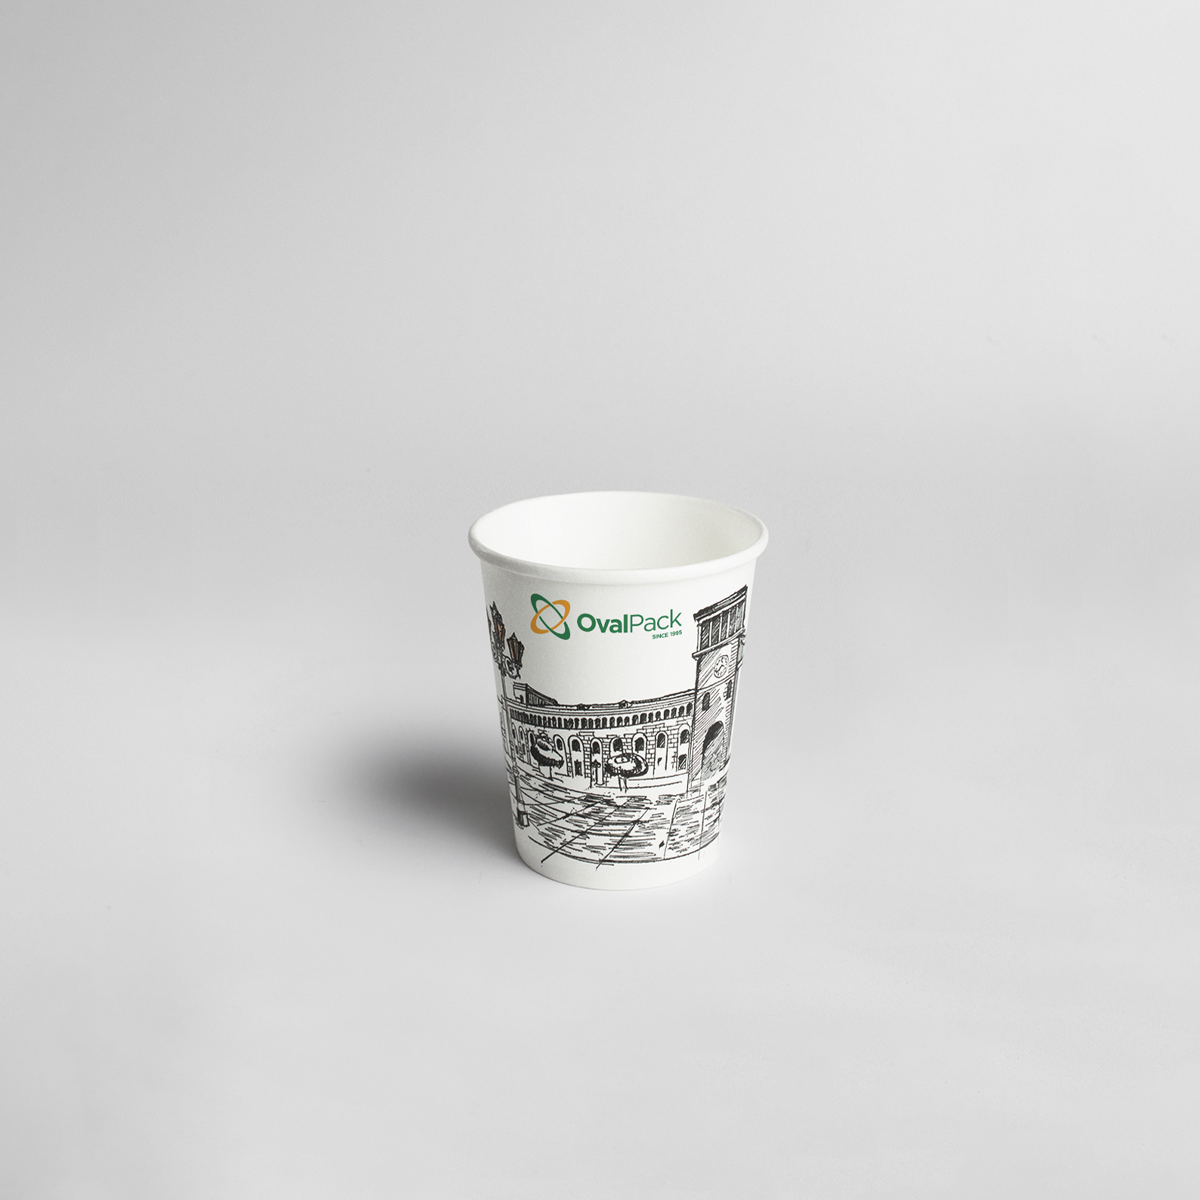 Paper cup (2000 pieces)